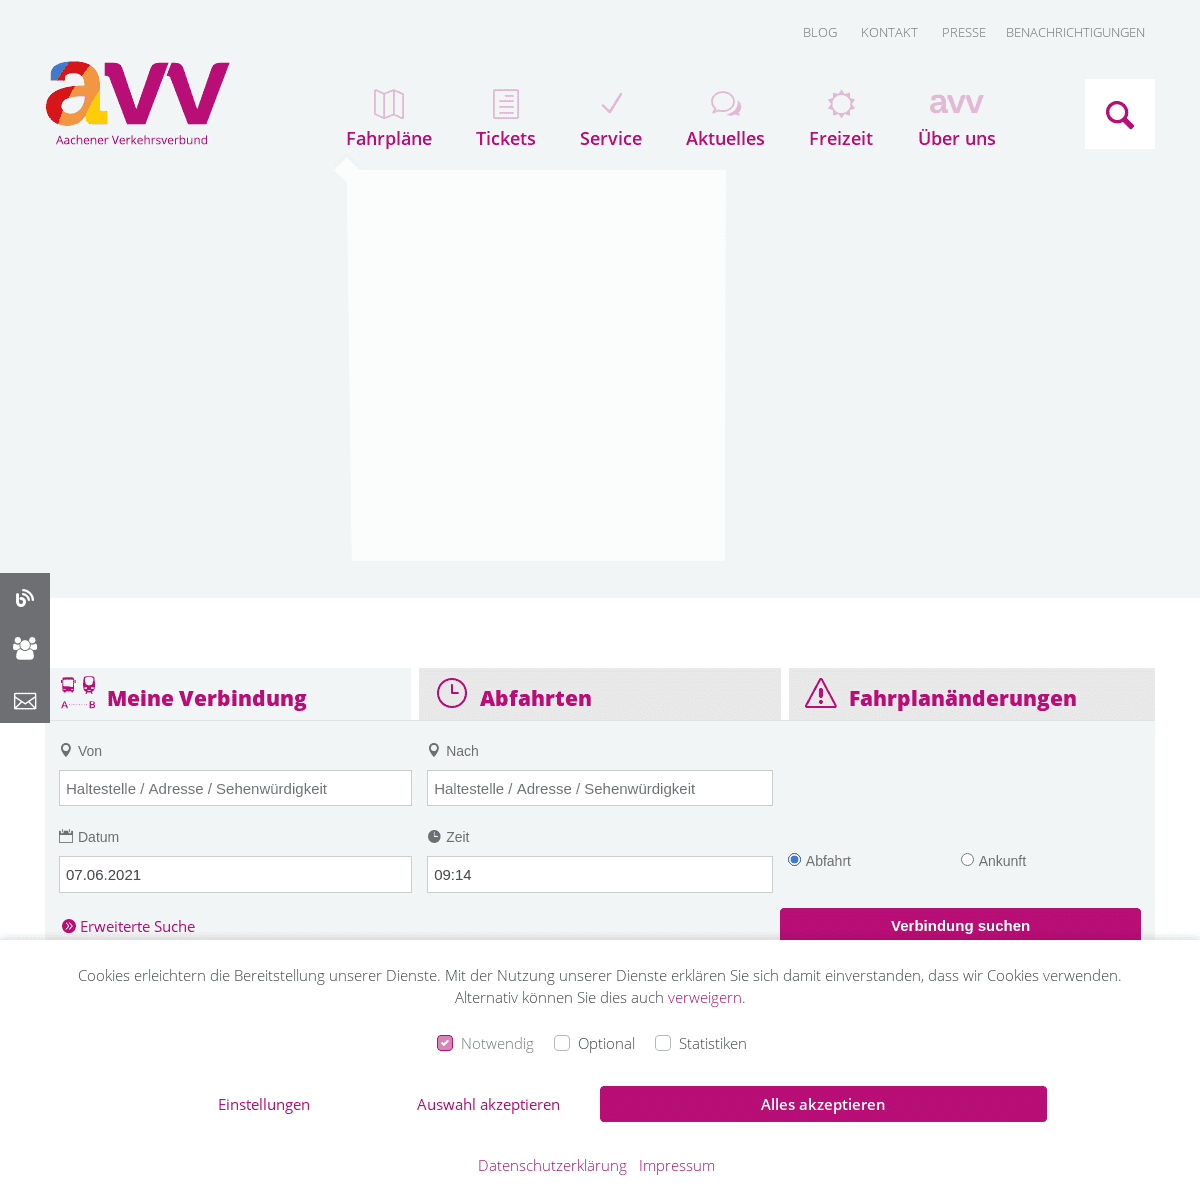 A complete backup of https://avv.de